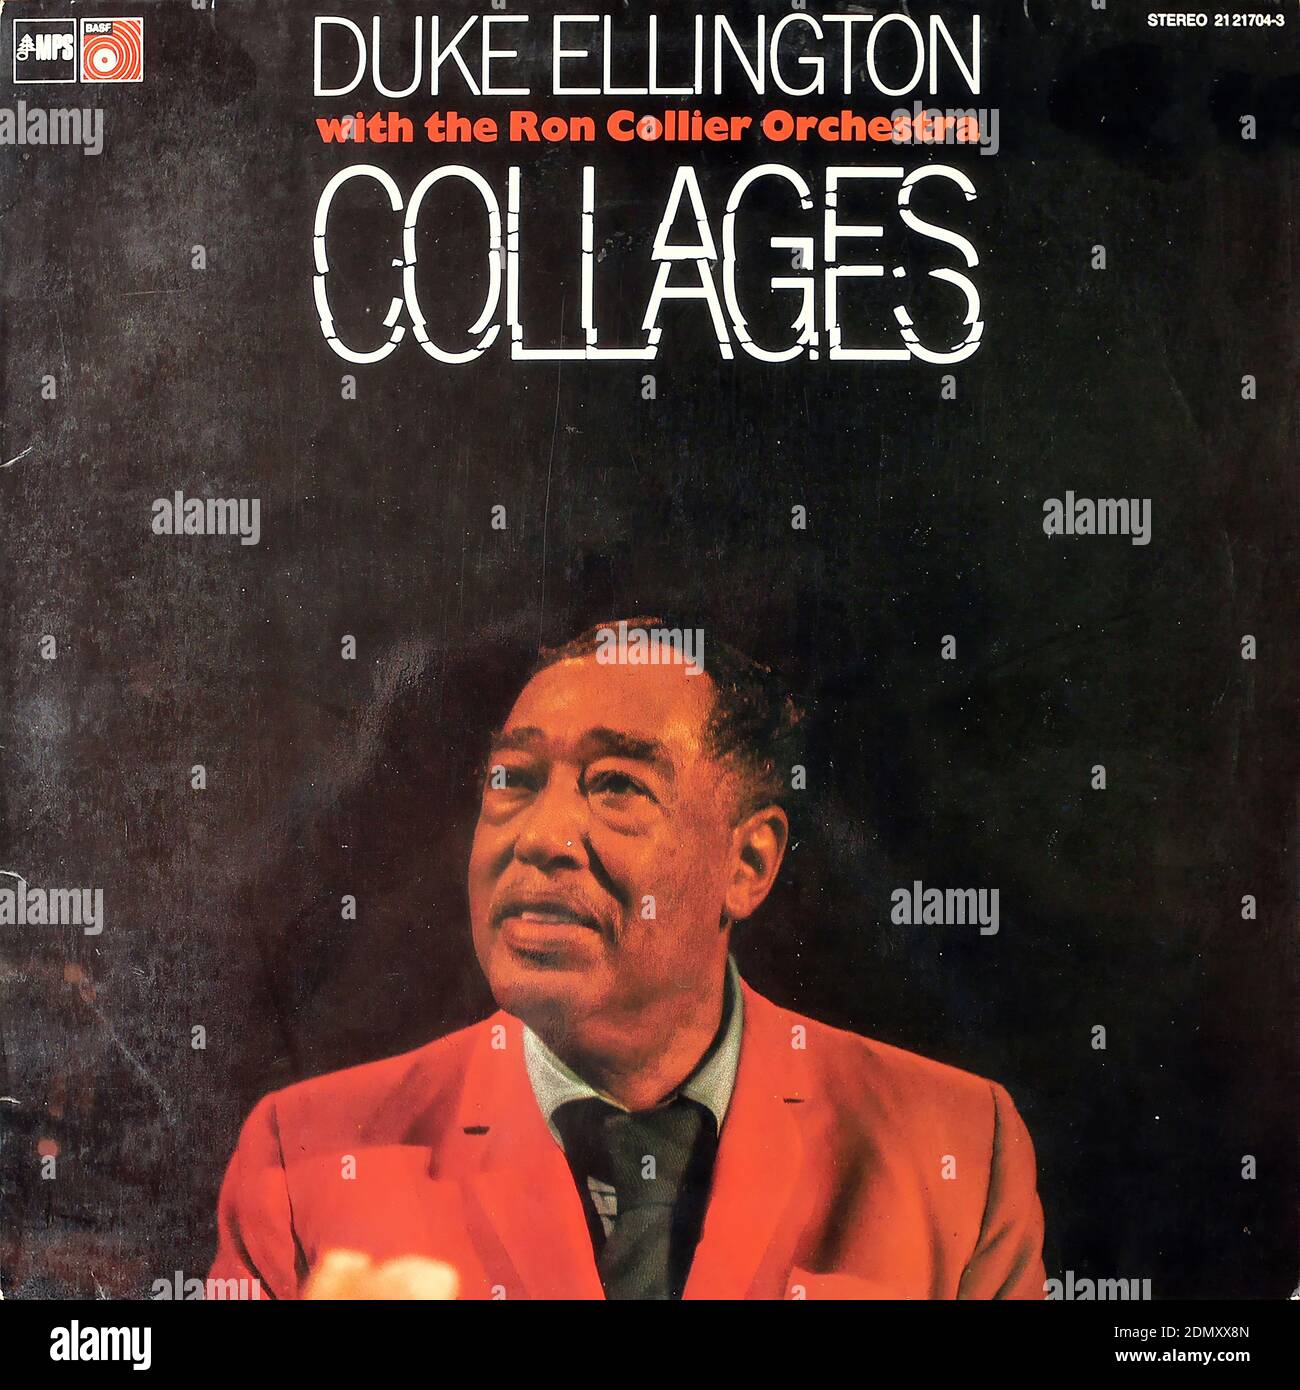 Duke Ellington with Ron Collier Orch. - Collages, BasF MPS 21 21704-3,  1973, Toronto - Vintage vinyl album cover Stock Photo - Alamy